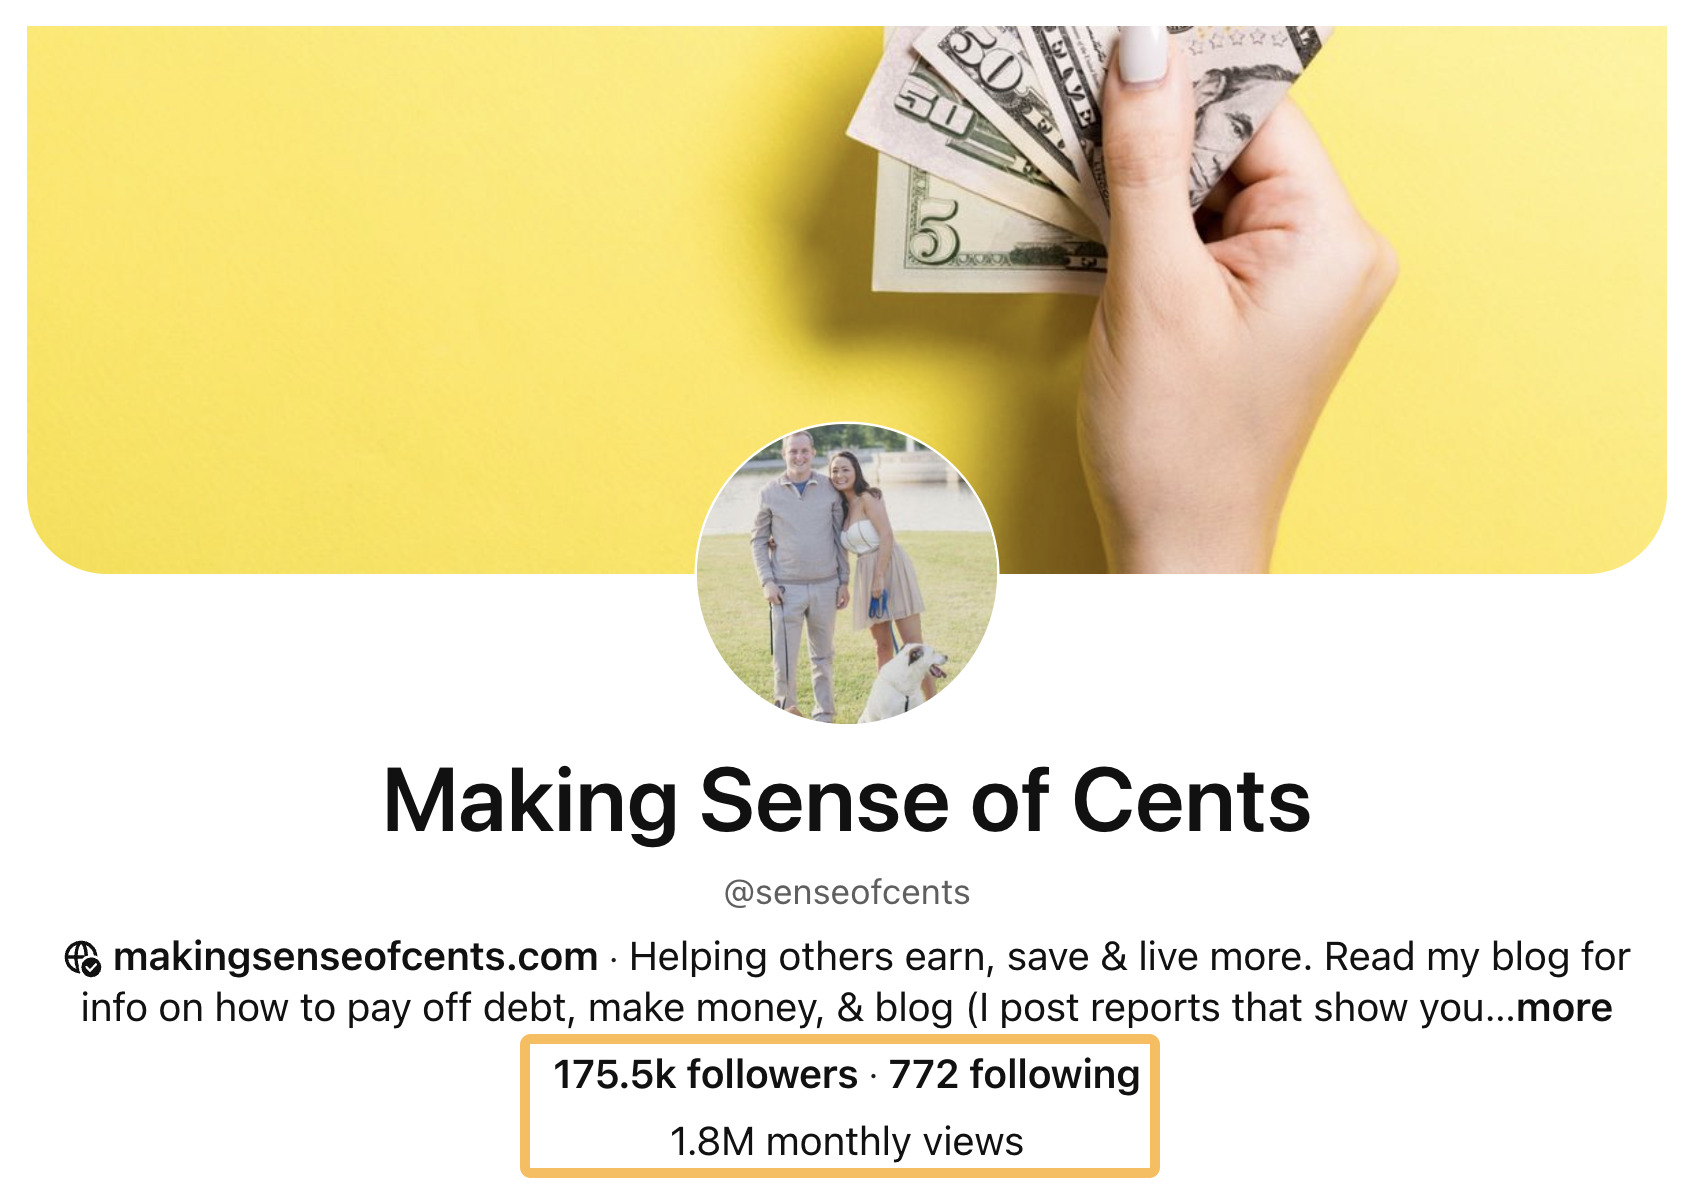 Making Sense of Cents' Pinterest account